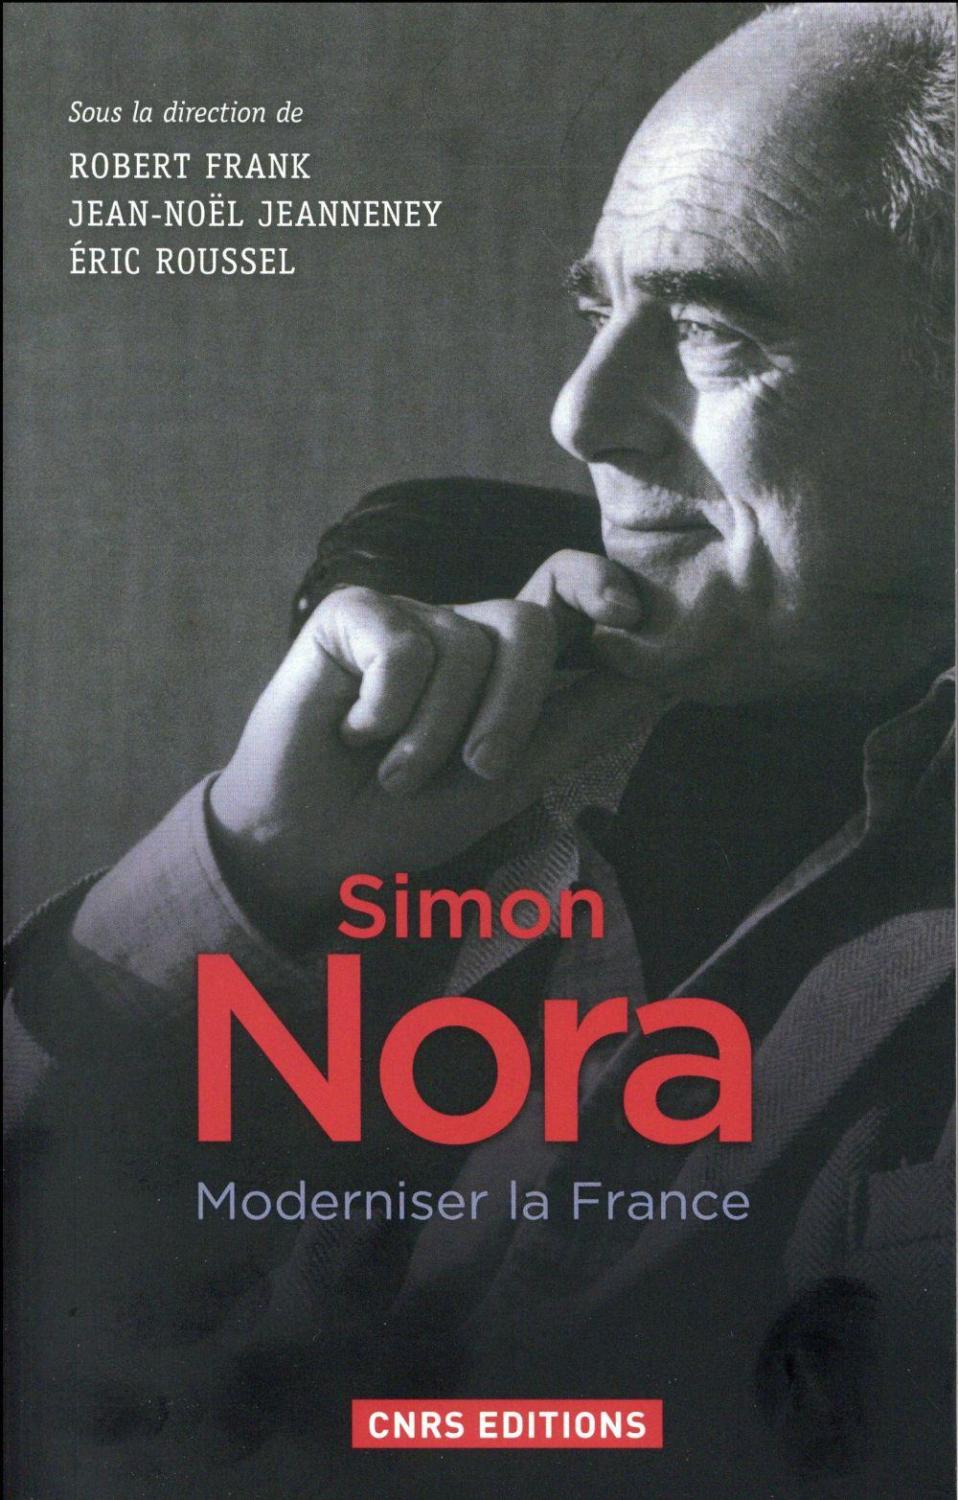 Simon Nora, une volonté modernisatrice - Frank, Robert; Roussel, Eric ; Jeanneney, Jean-Noel